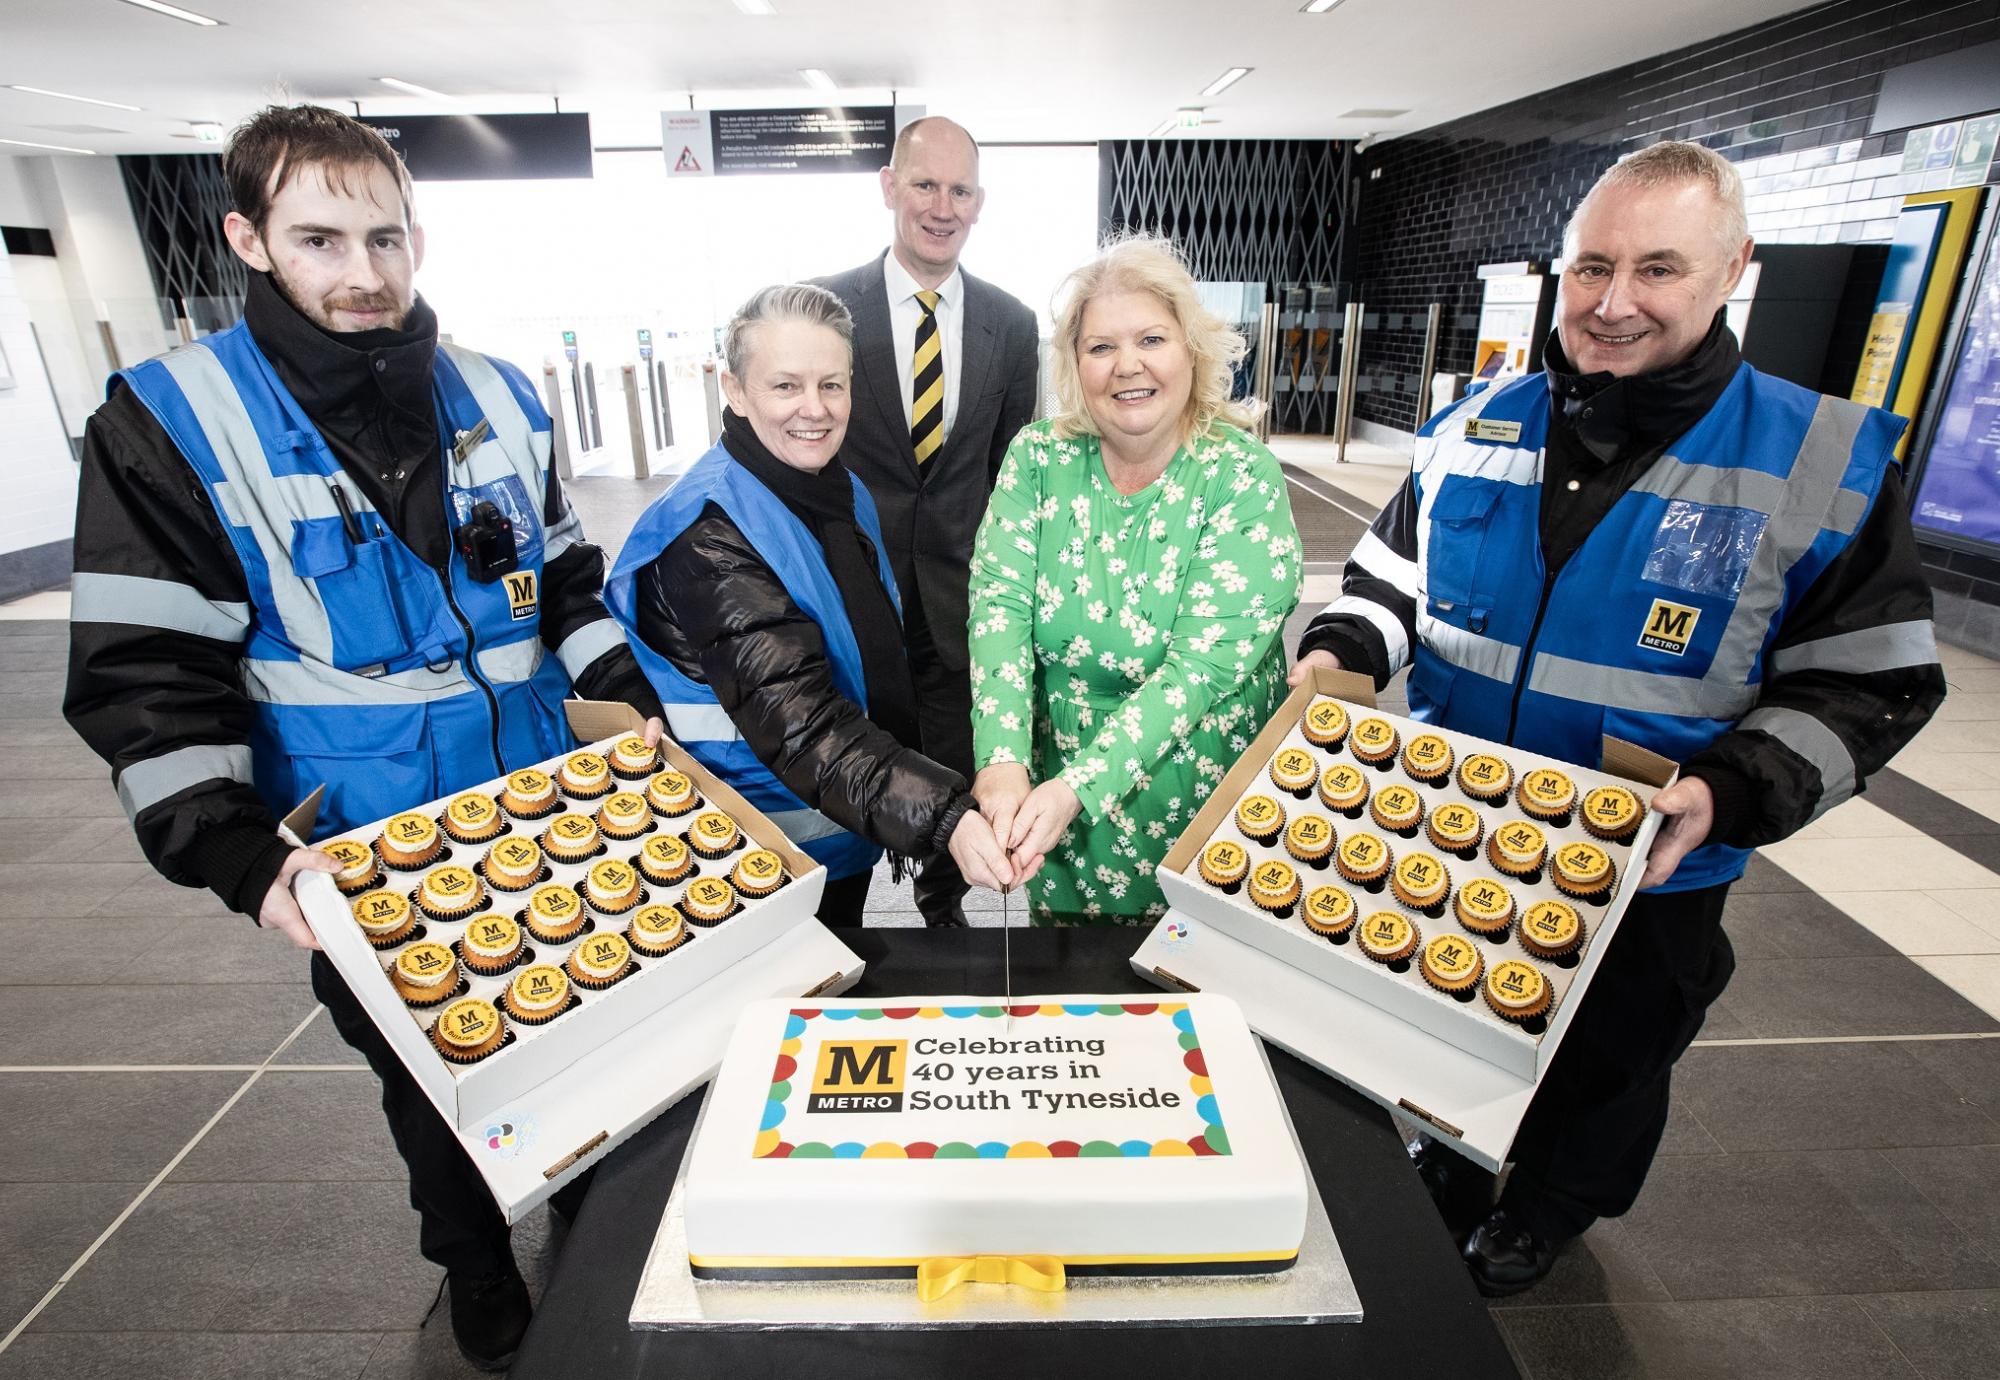 Tyne and Wear Metro line in South Tyneside 40th anniversary cake